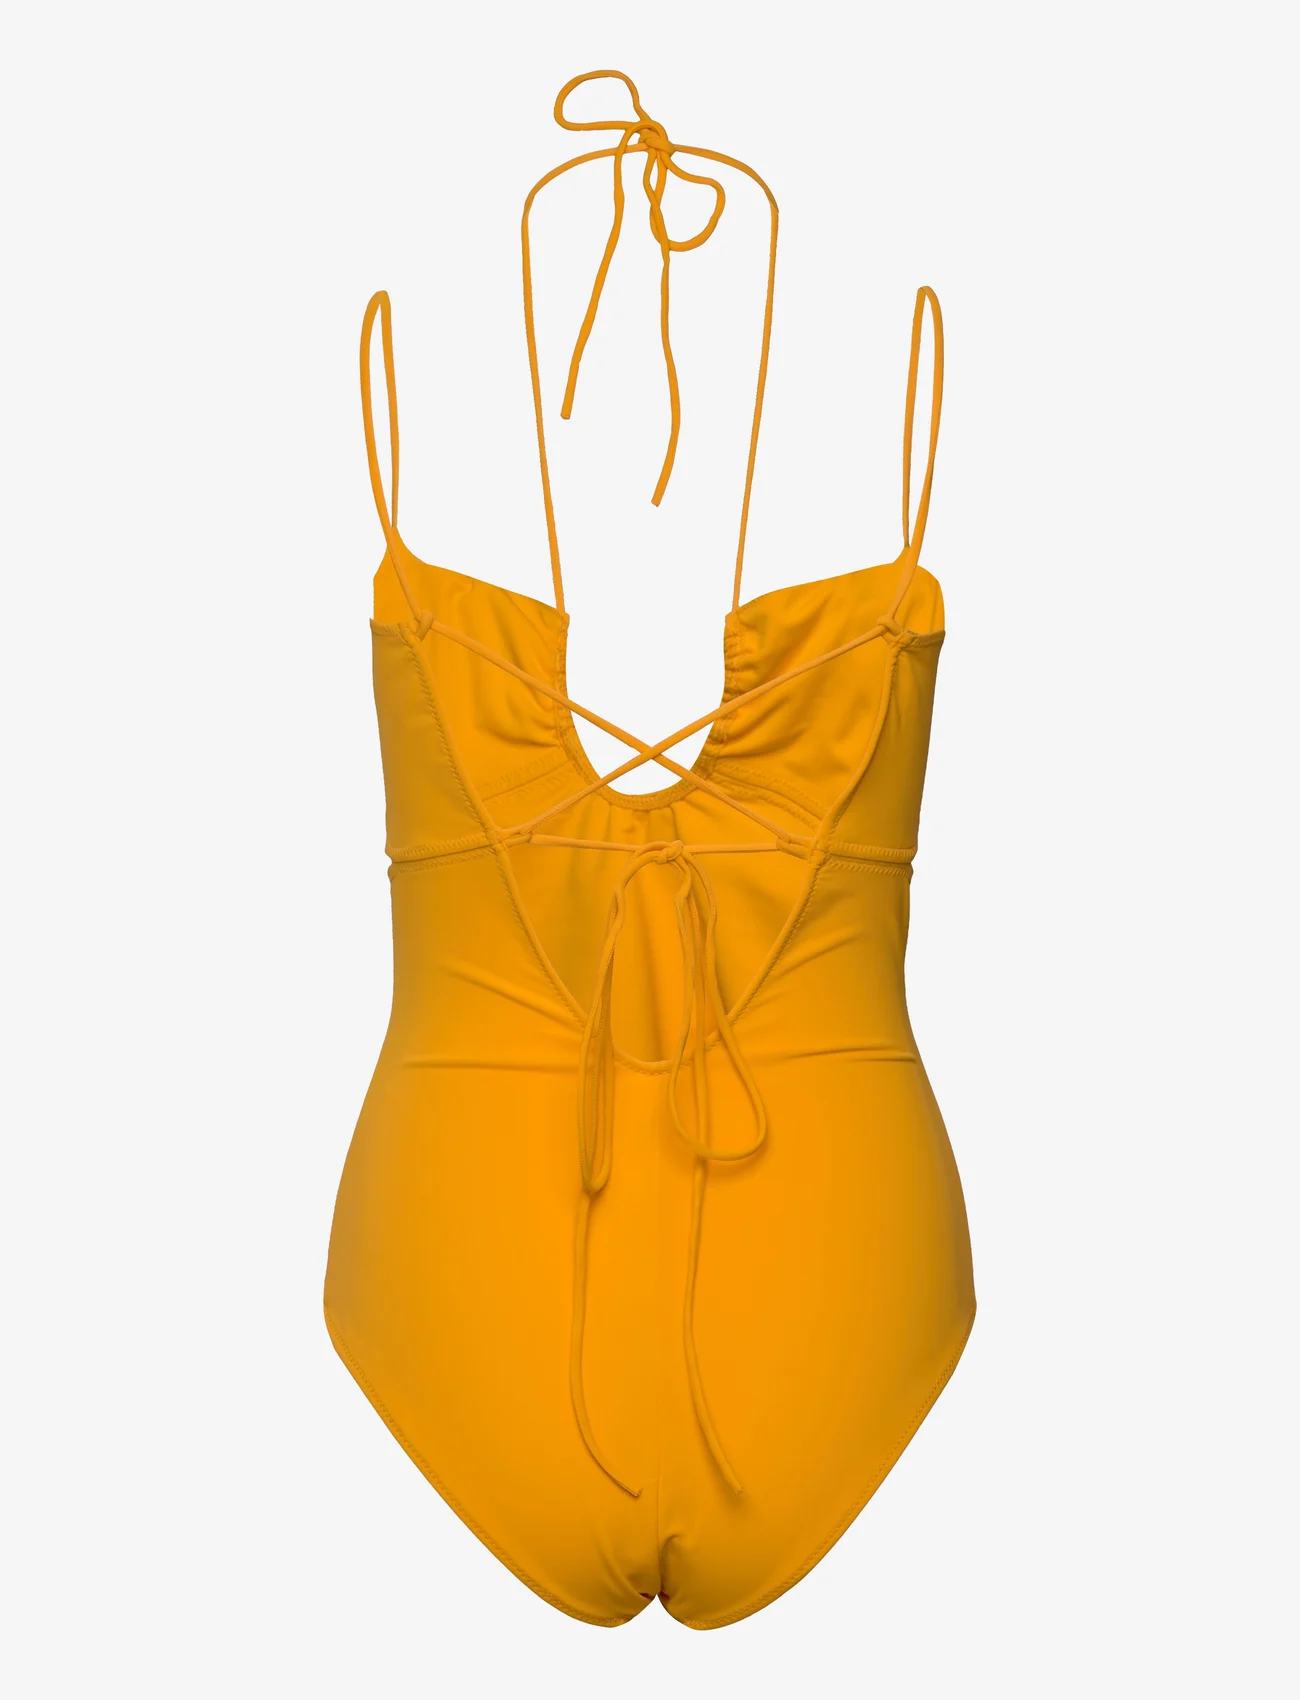 RODEBJER - Rodebjer Casoria - swimsuits - orange haze - 1